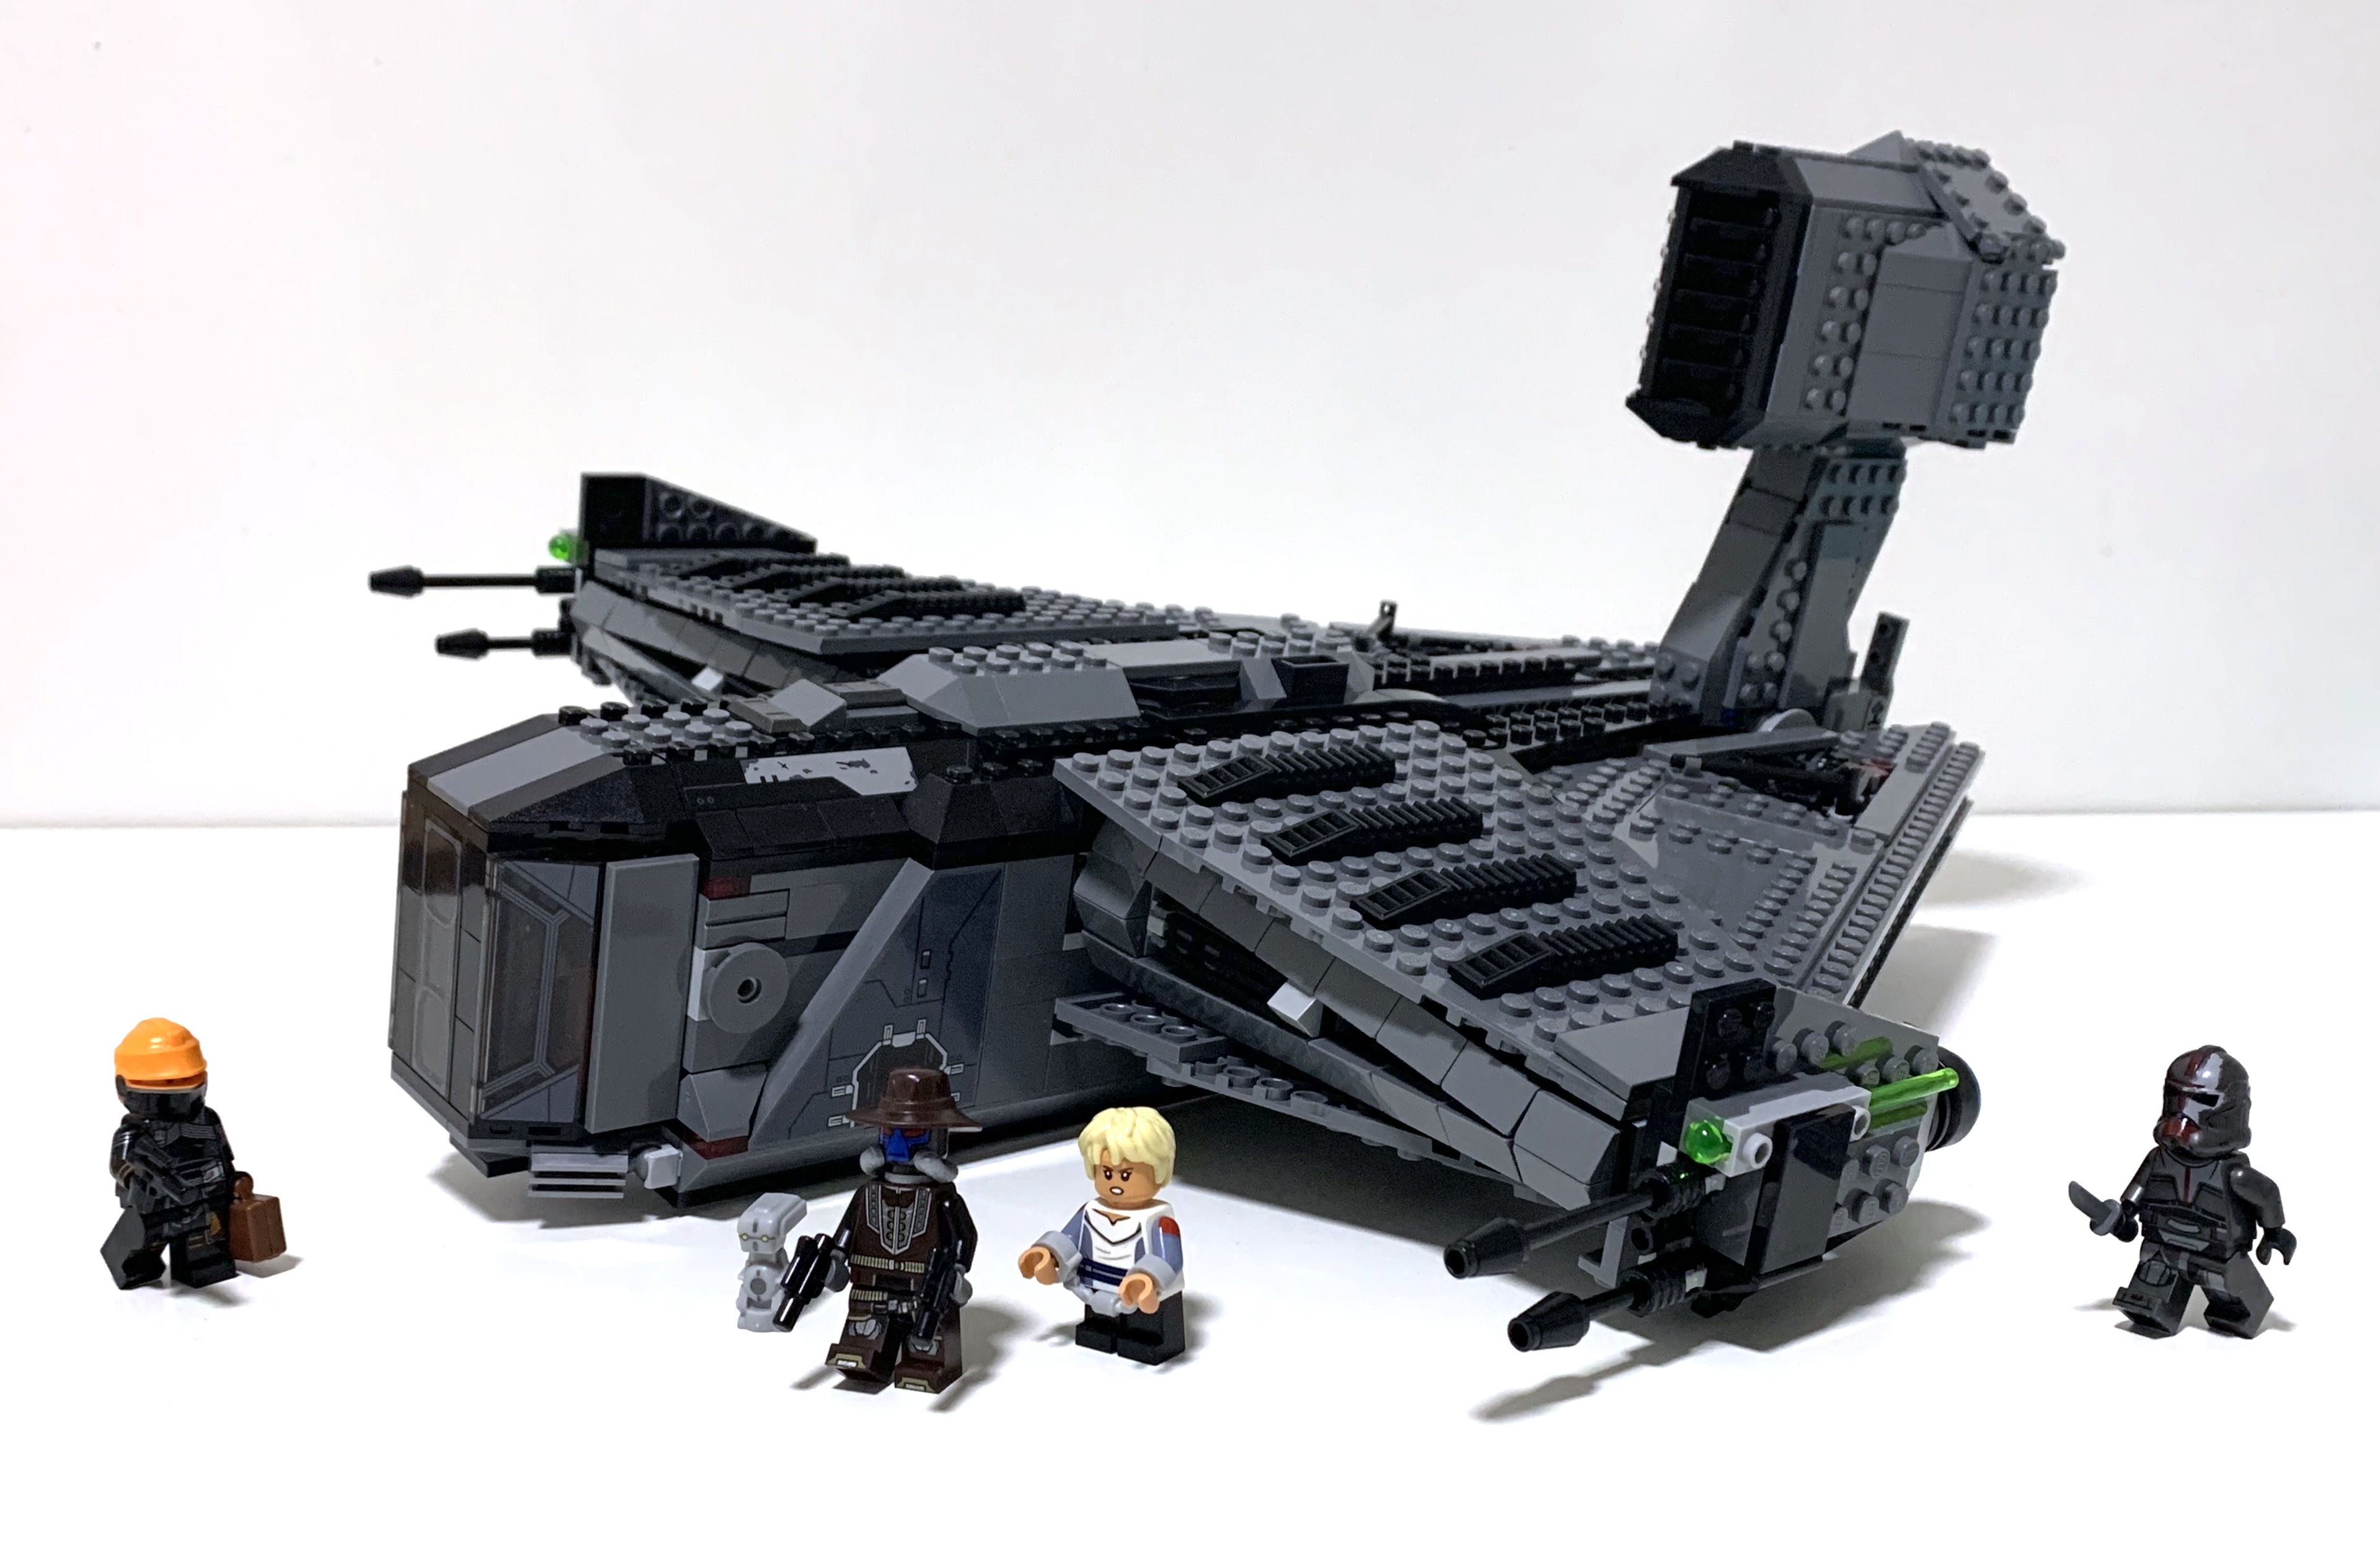 All Lego Star Wars The Last Jedi Sets so far - Lego Speed Build